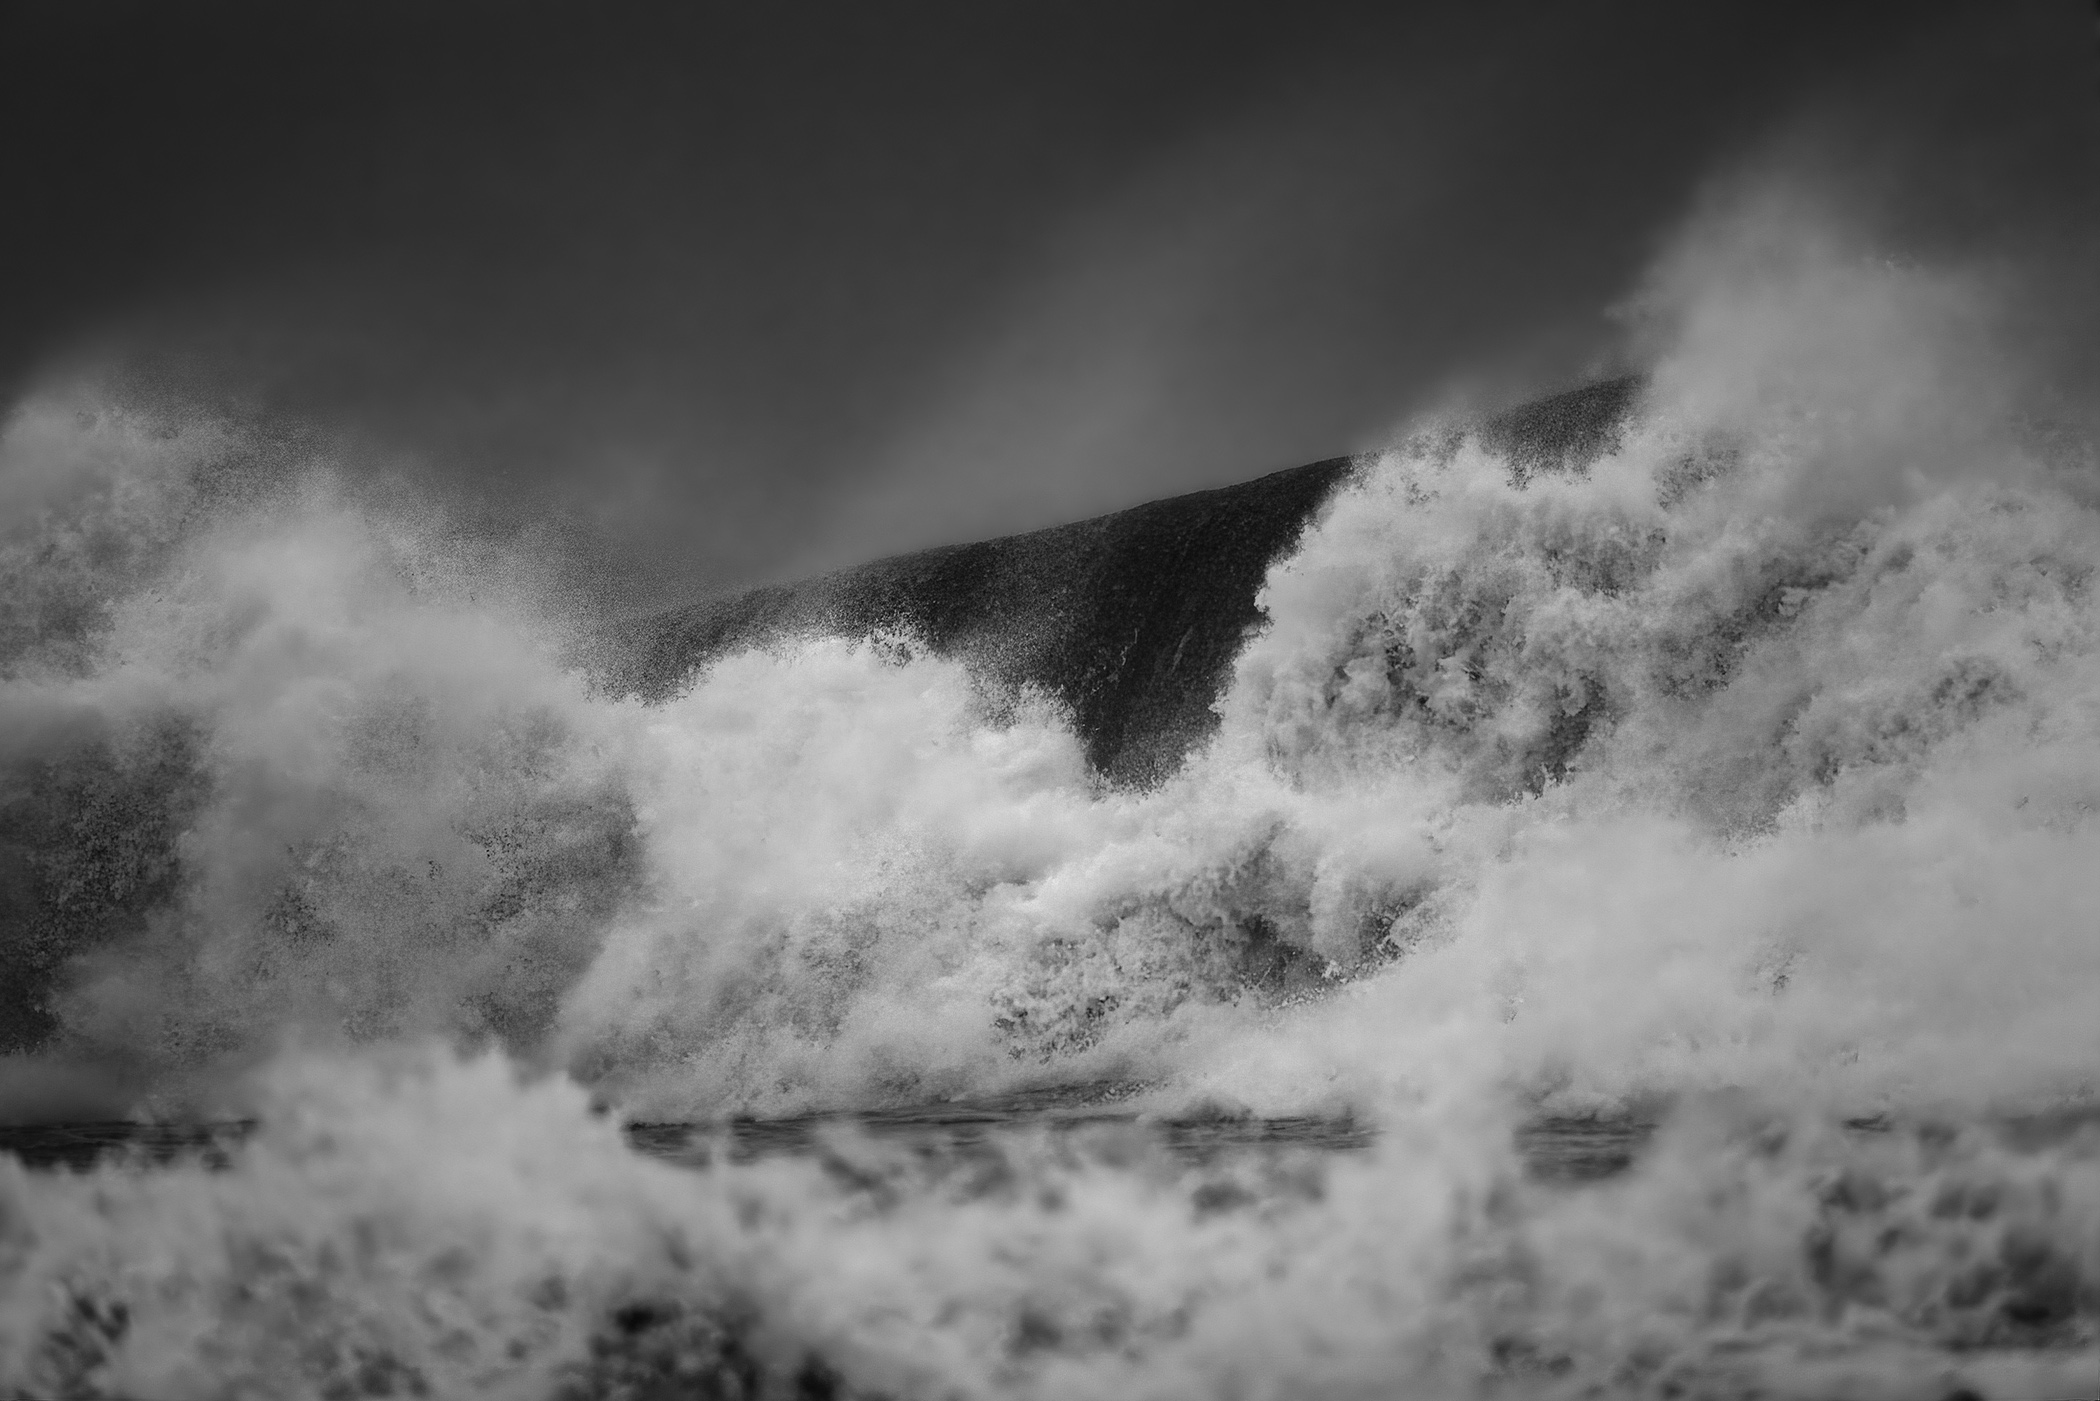 Supreme-ocean-waves-storm-SandyHook-GatewayNationalRecreationArea-NewJersey